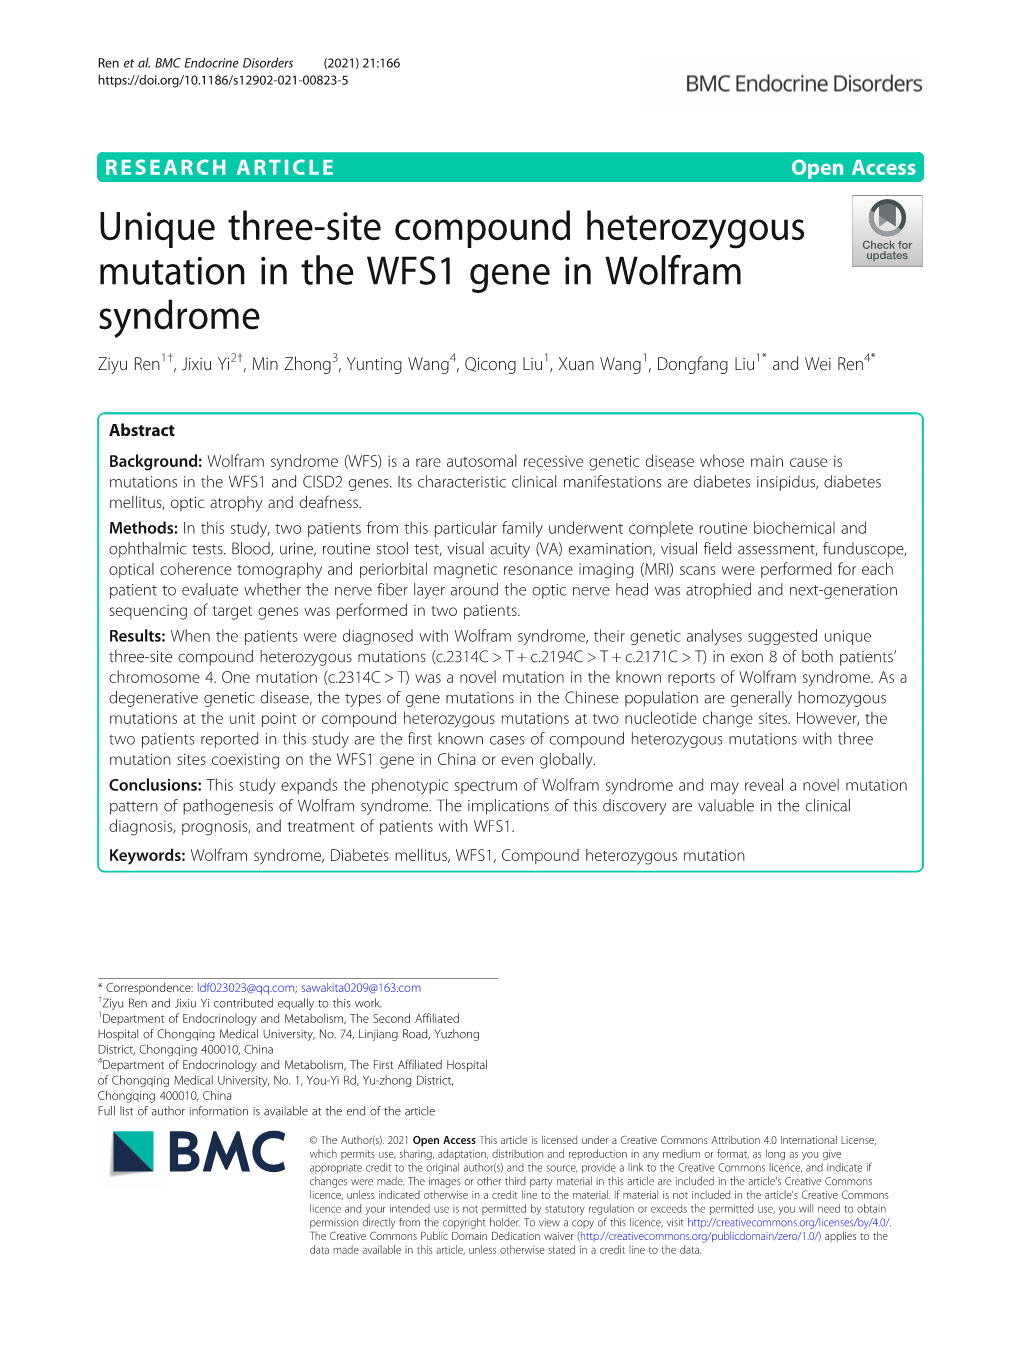 Unique Three-Site Compound Heterozygous Mutation in the WFS1